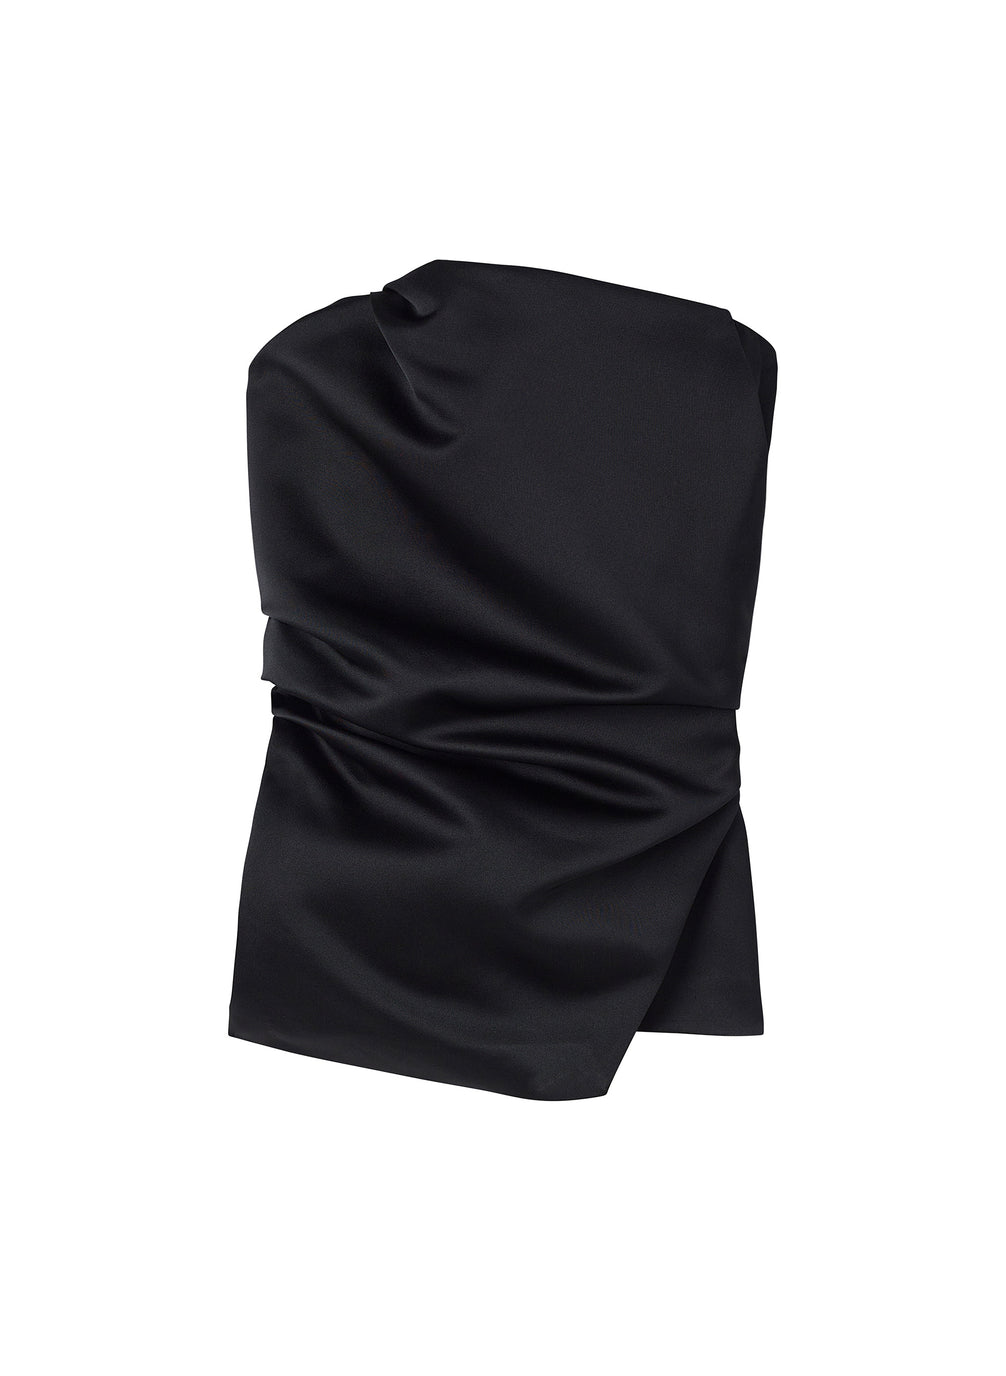 flatlay of black satin strapless top